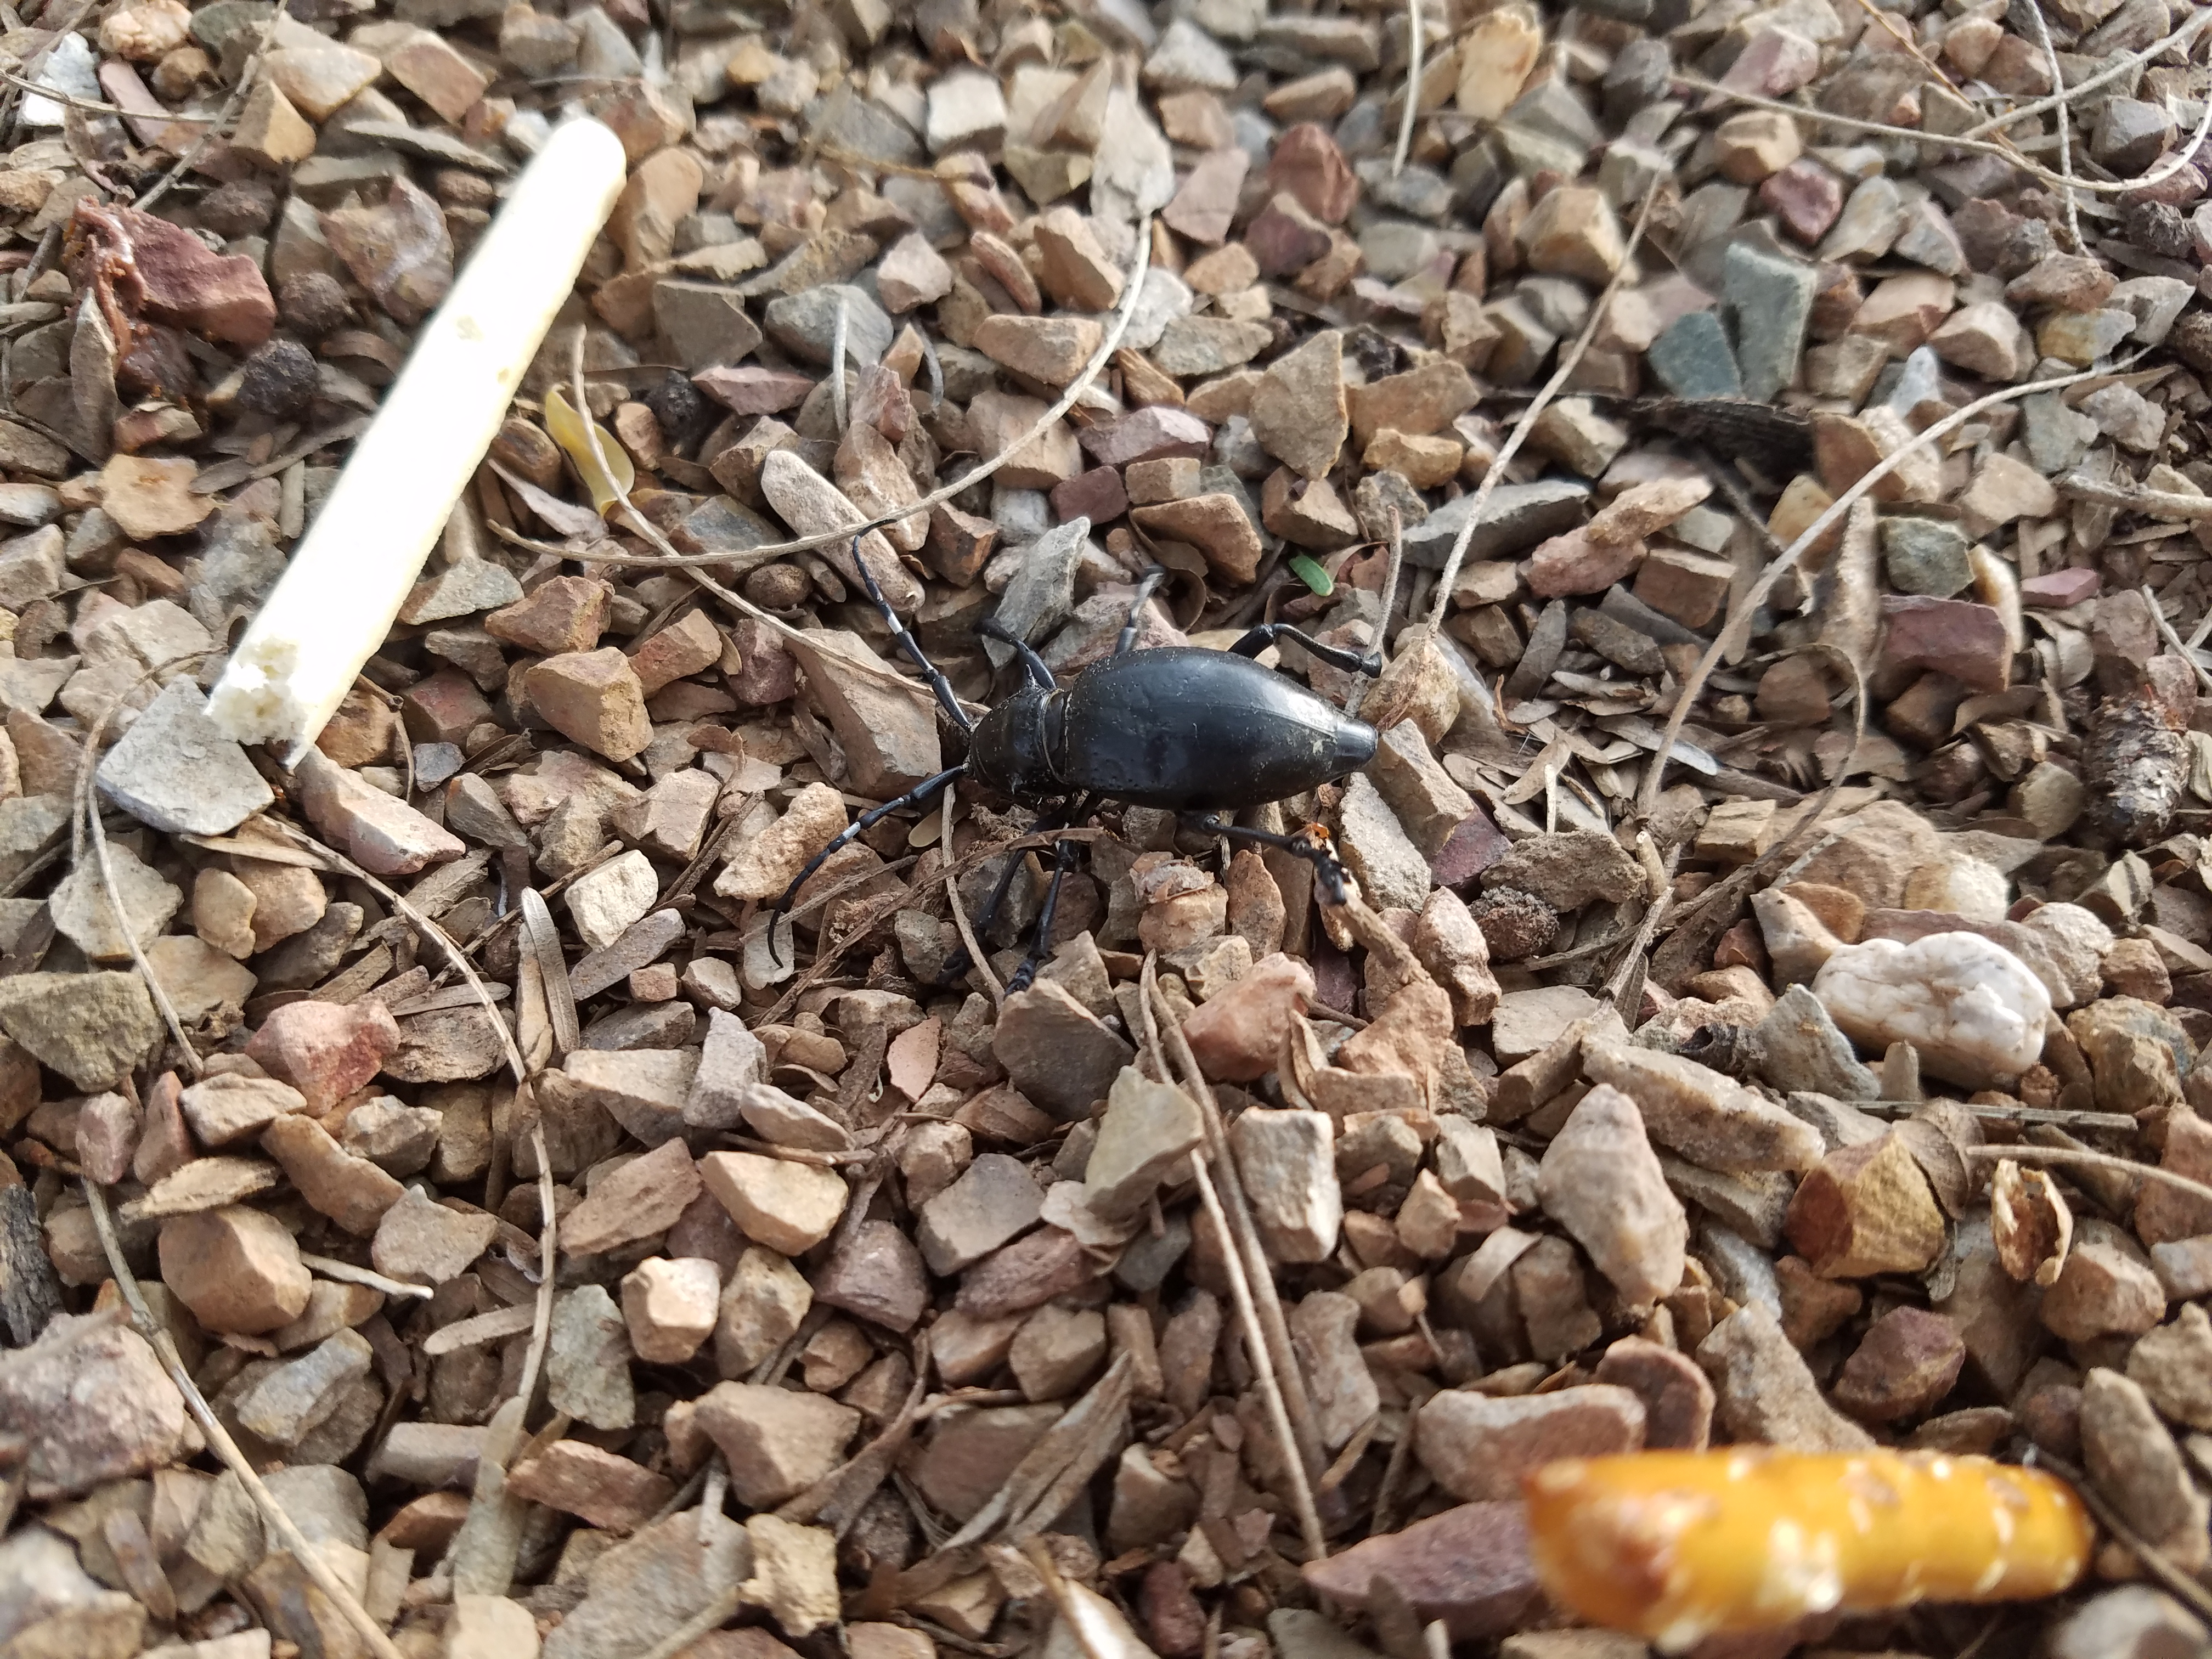 beetle near nutella sticks